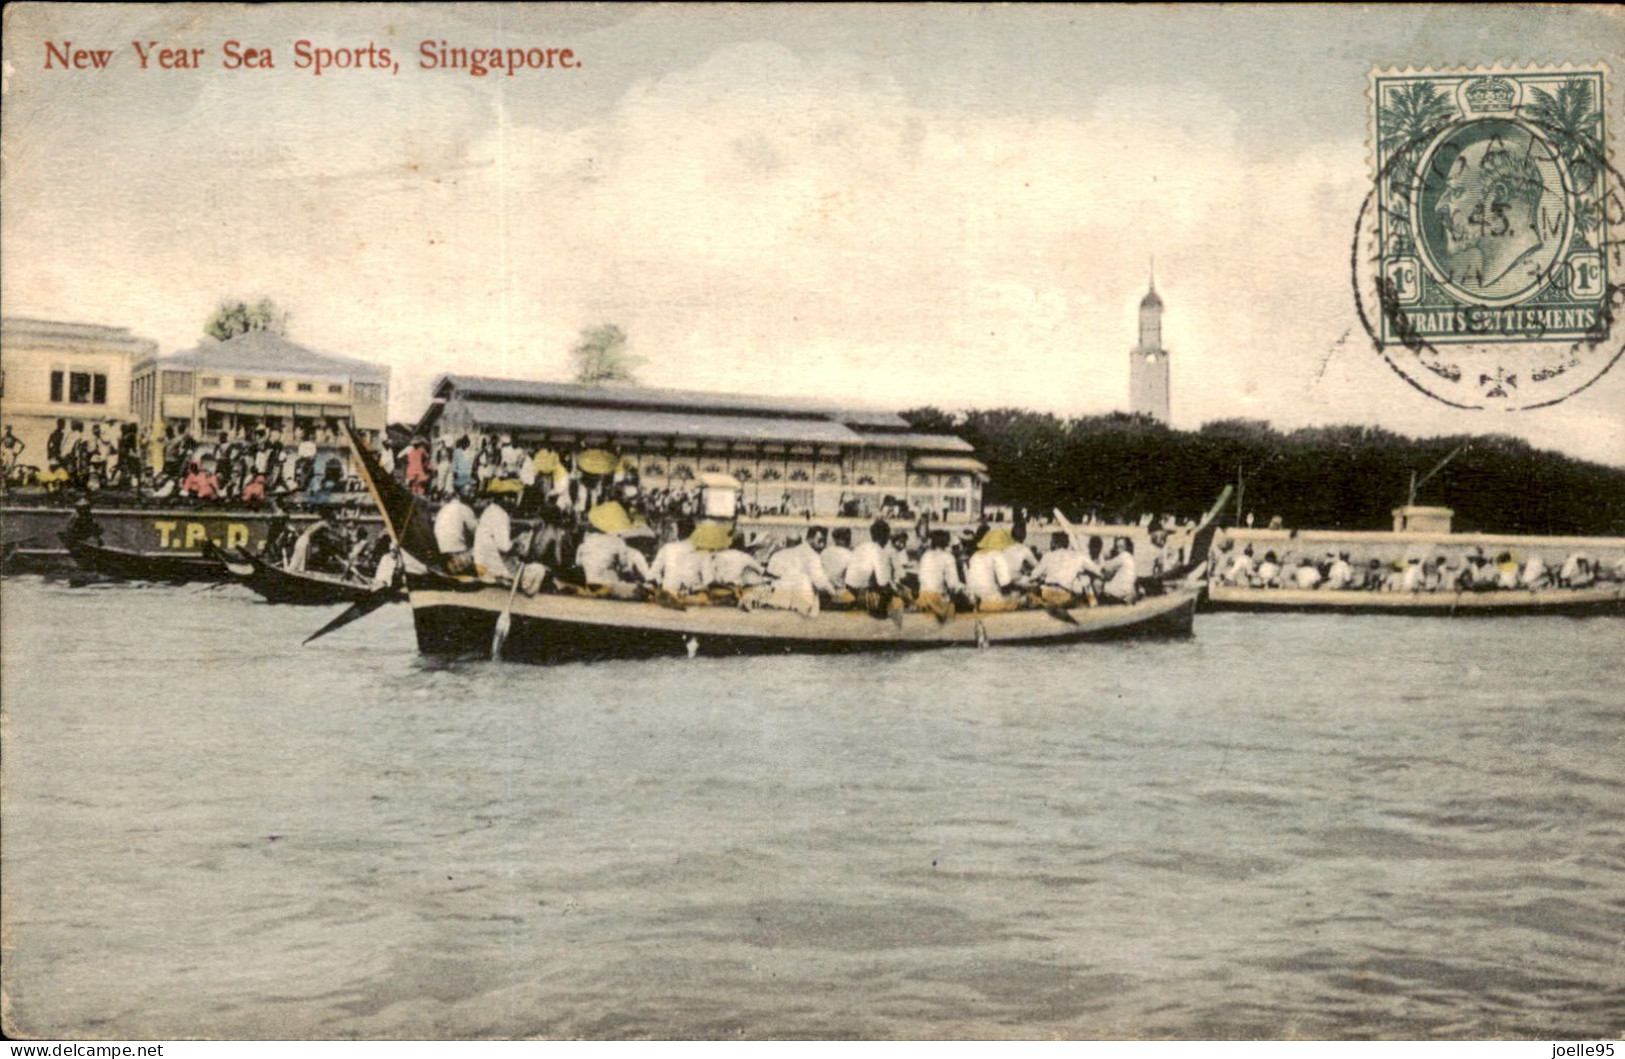 Singapore - Seo Sports New Year - 1910 - Singapore